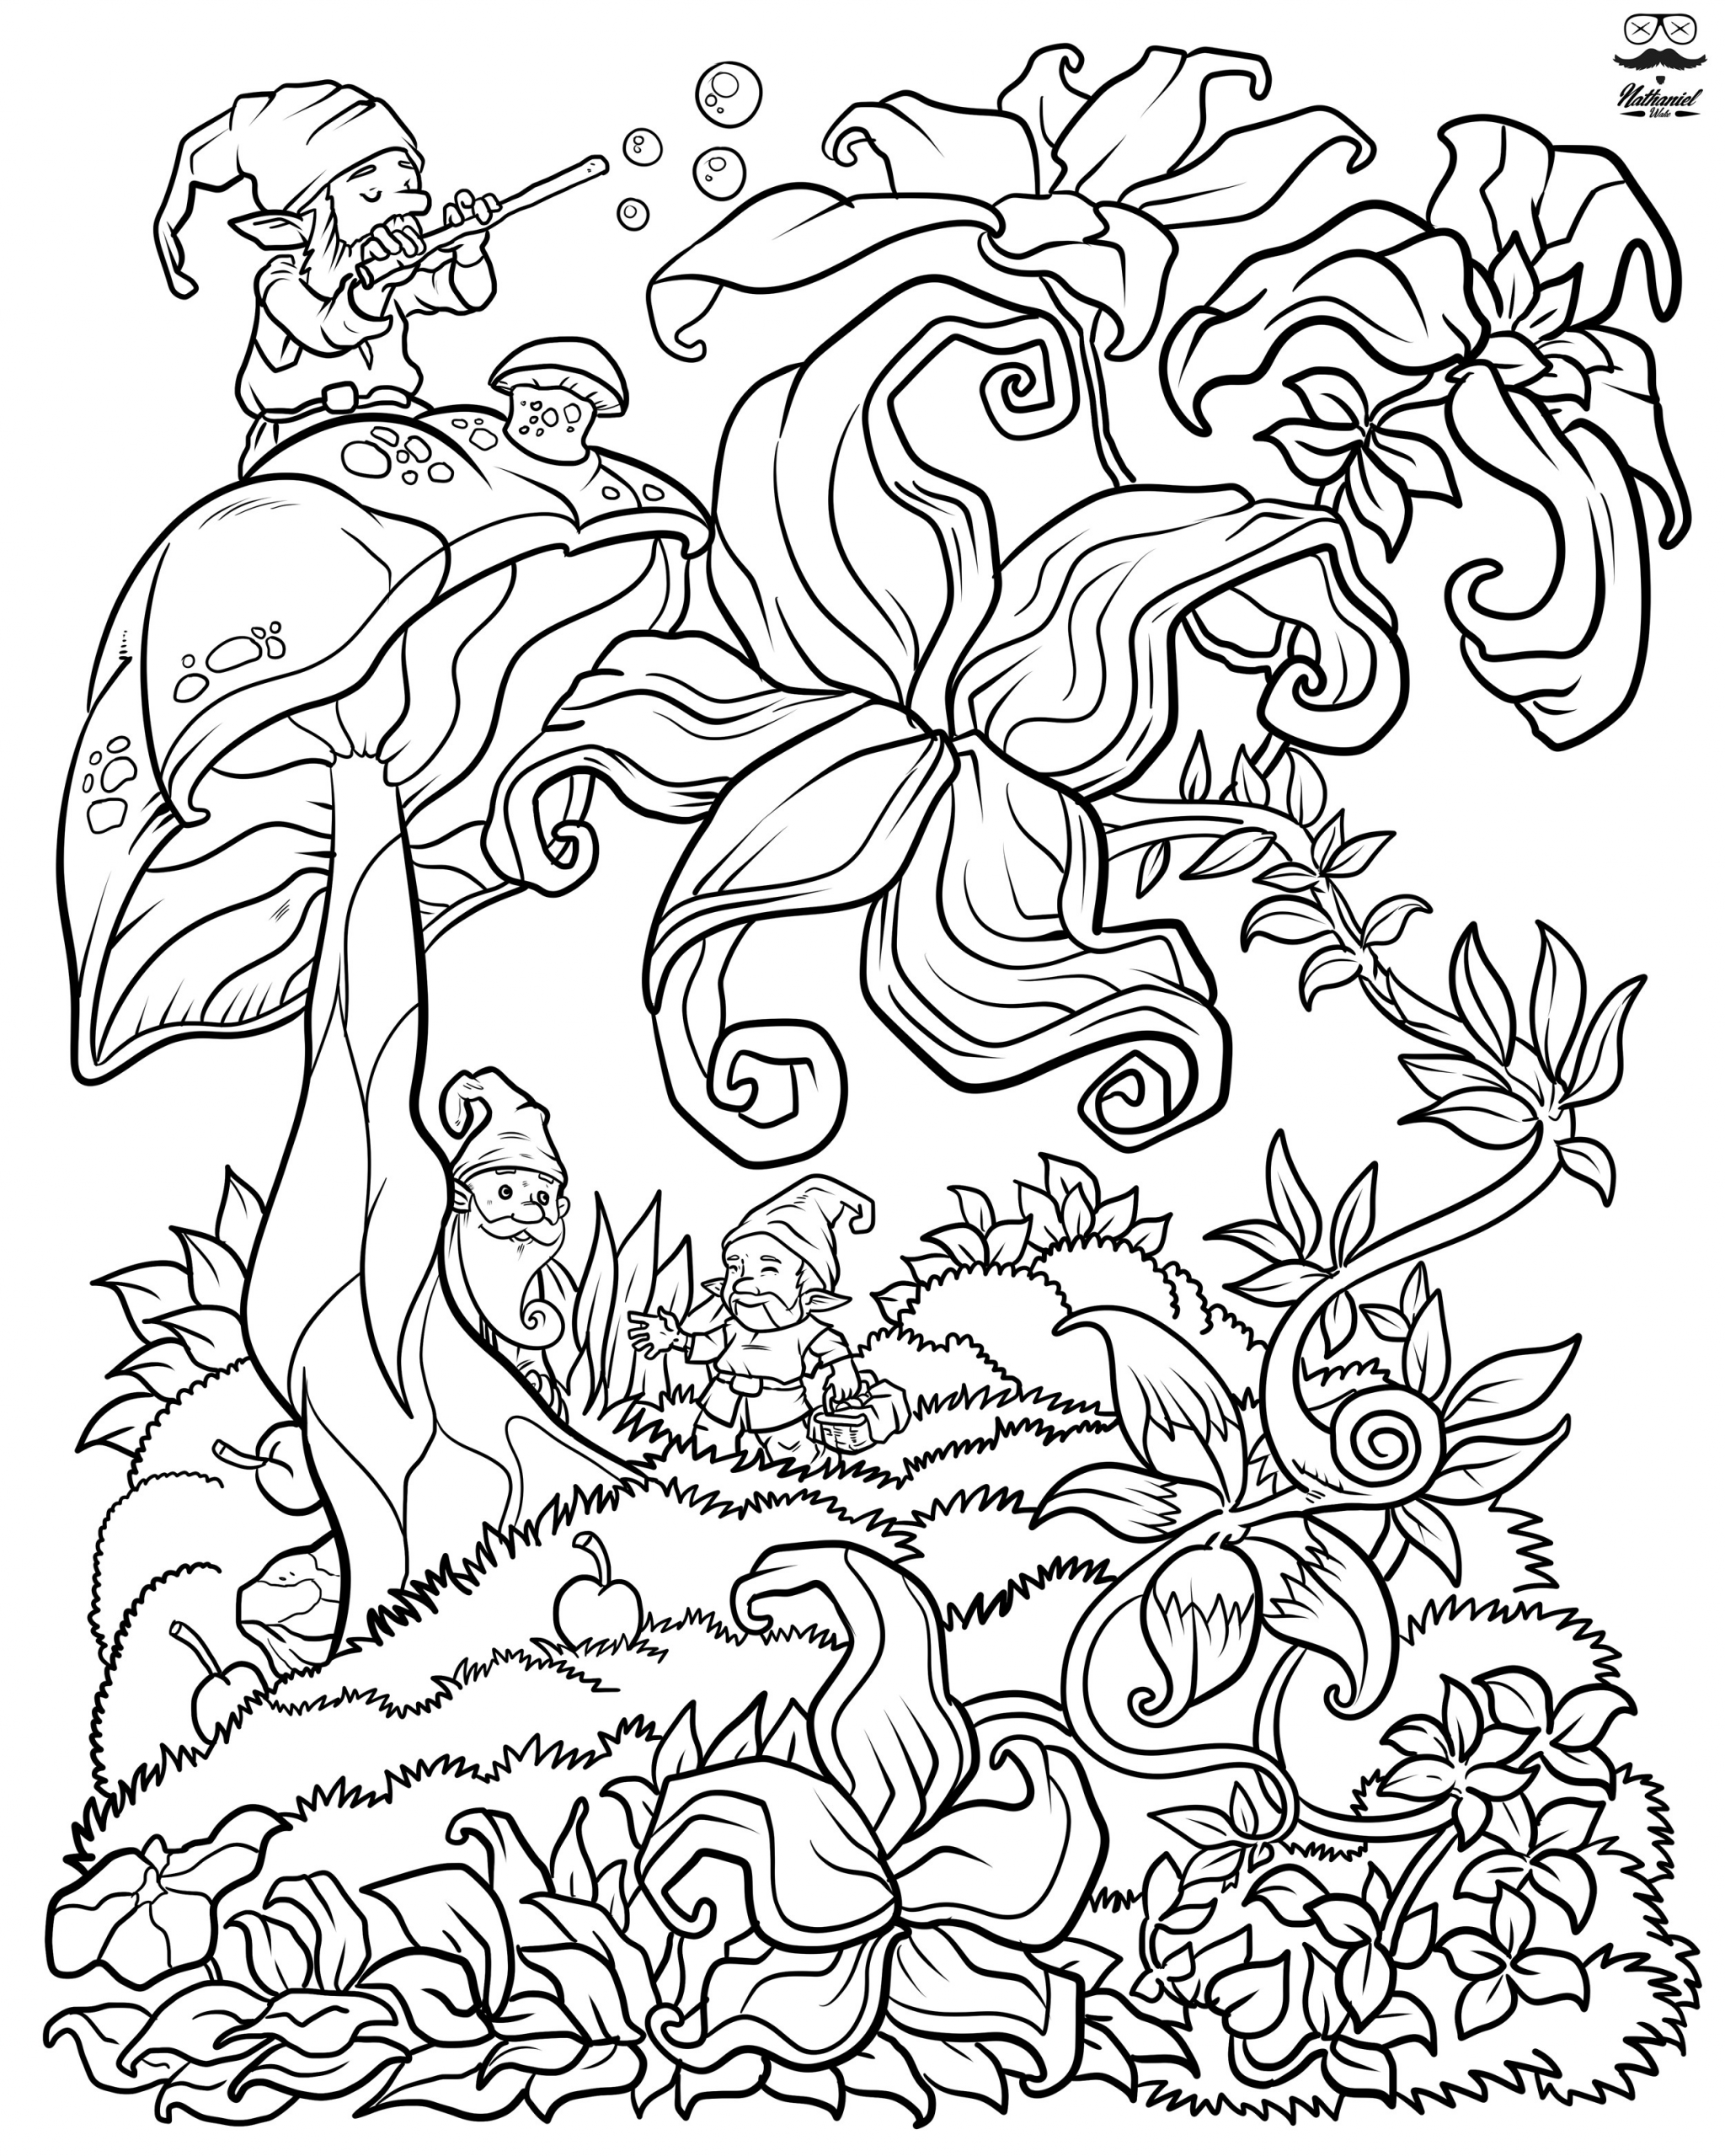 Coloring Pages Adult
 Floral Fantasy Digital Version Adult Coloring Book